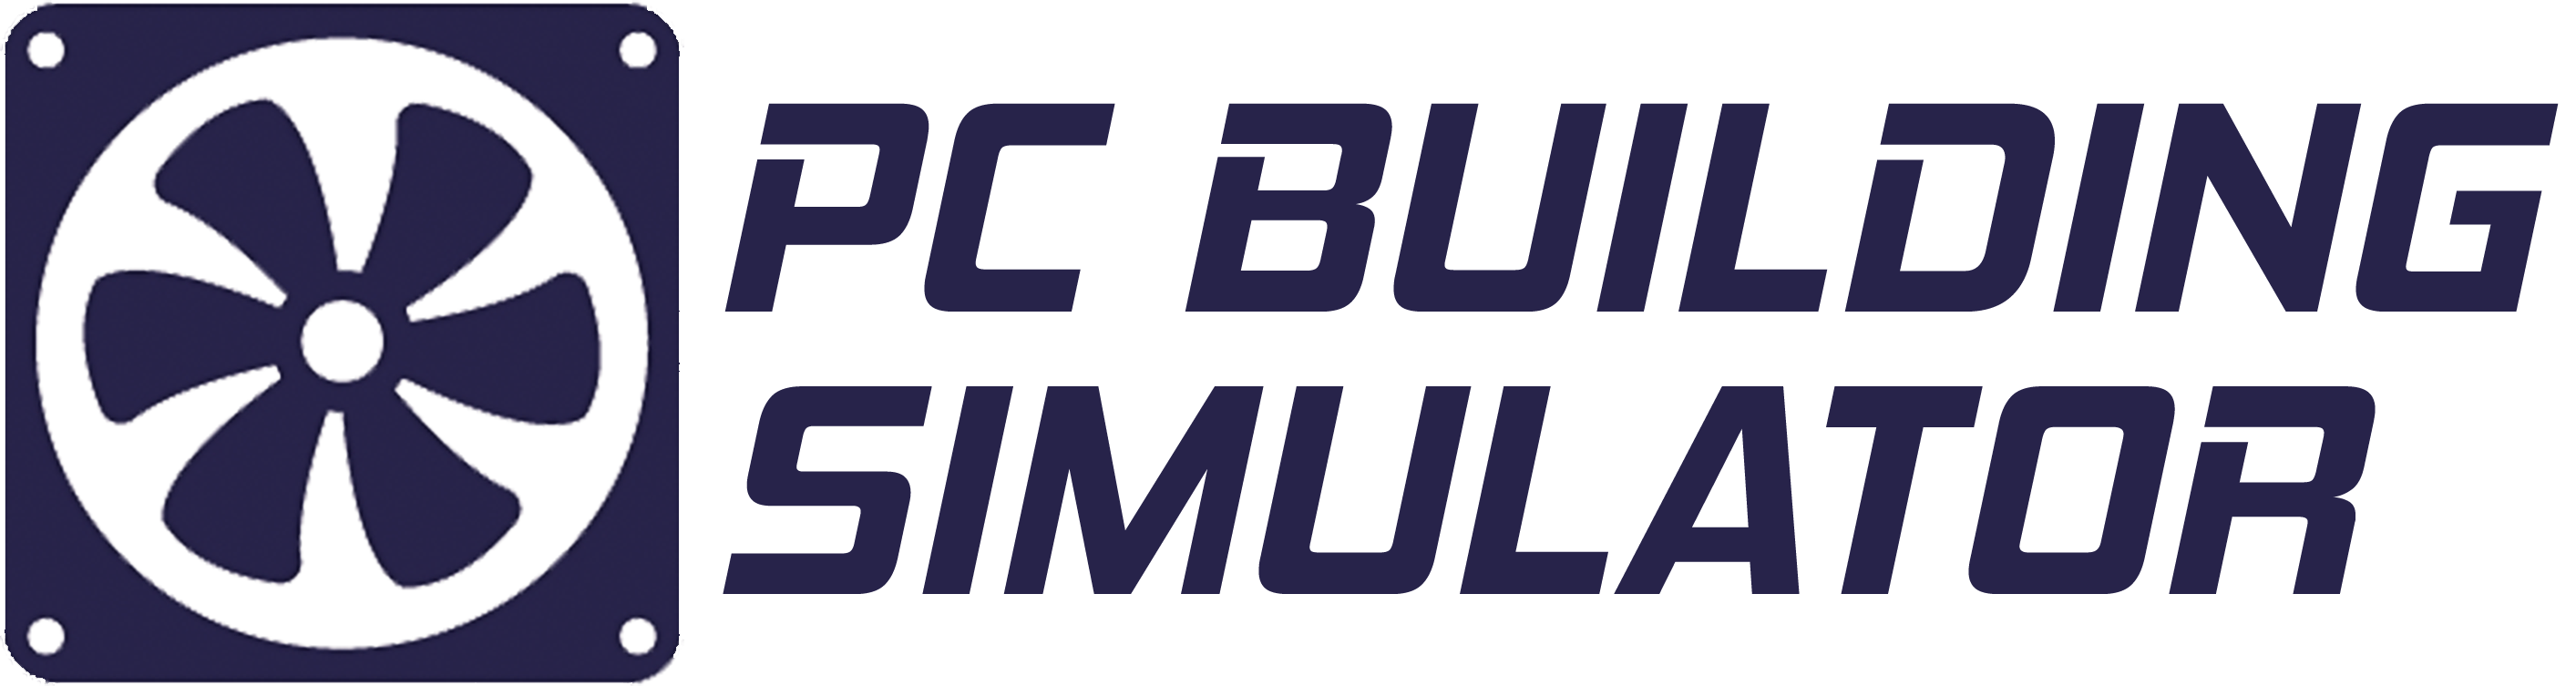 PC Building Simulator Prototype